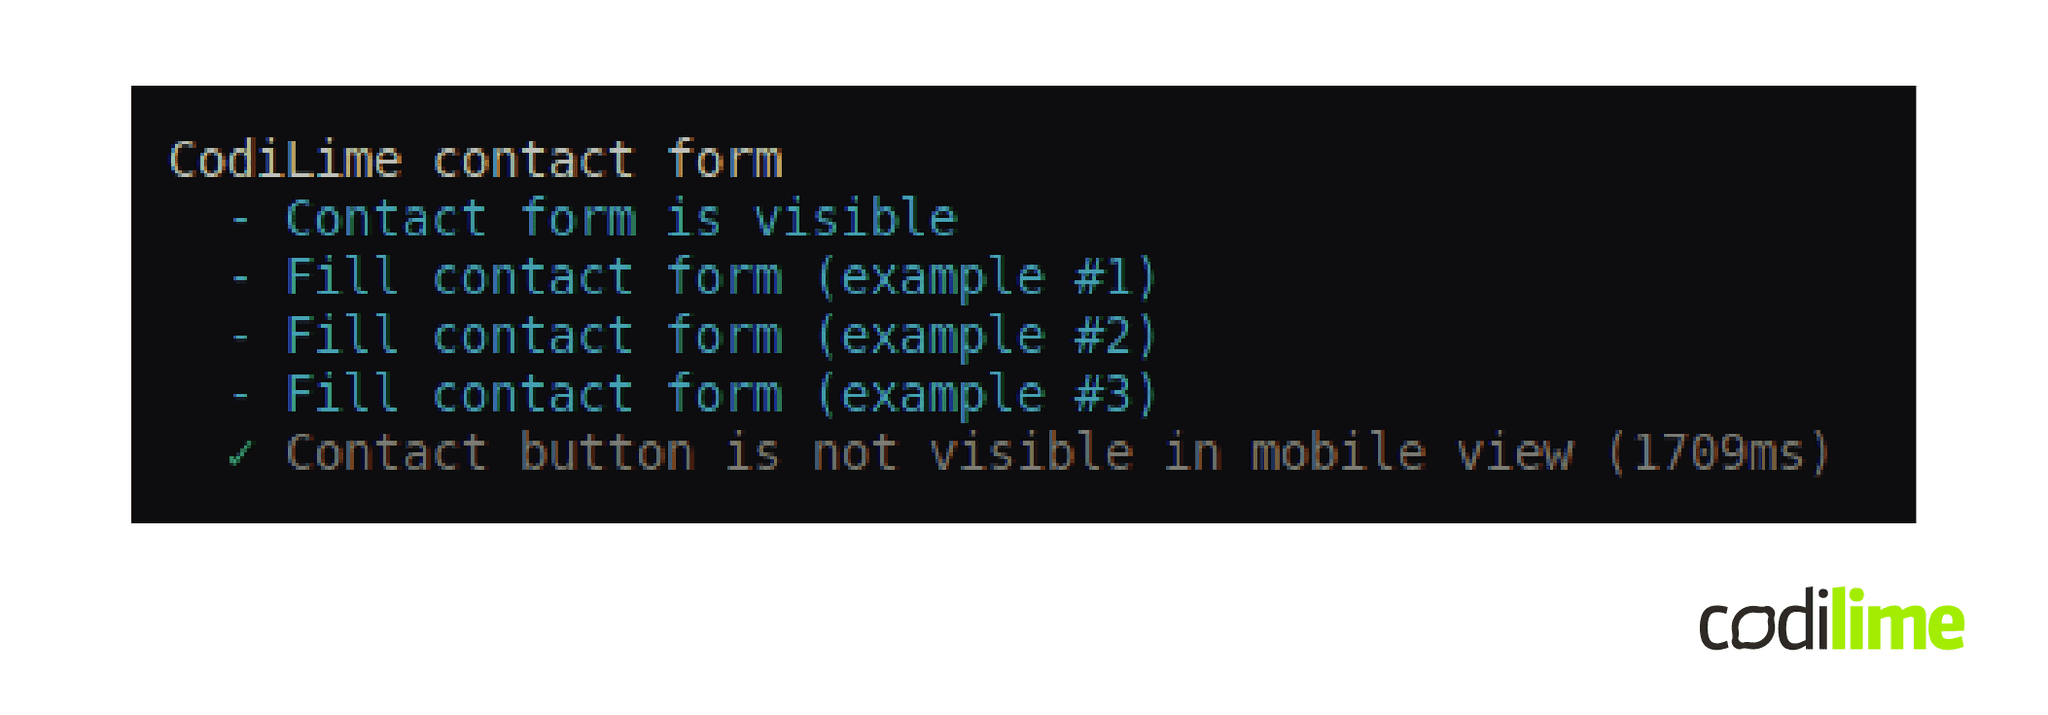 npx cypress run --env TAGS="@mobile"